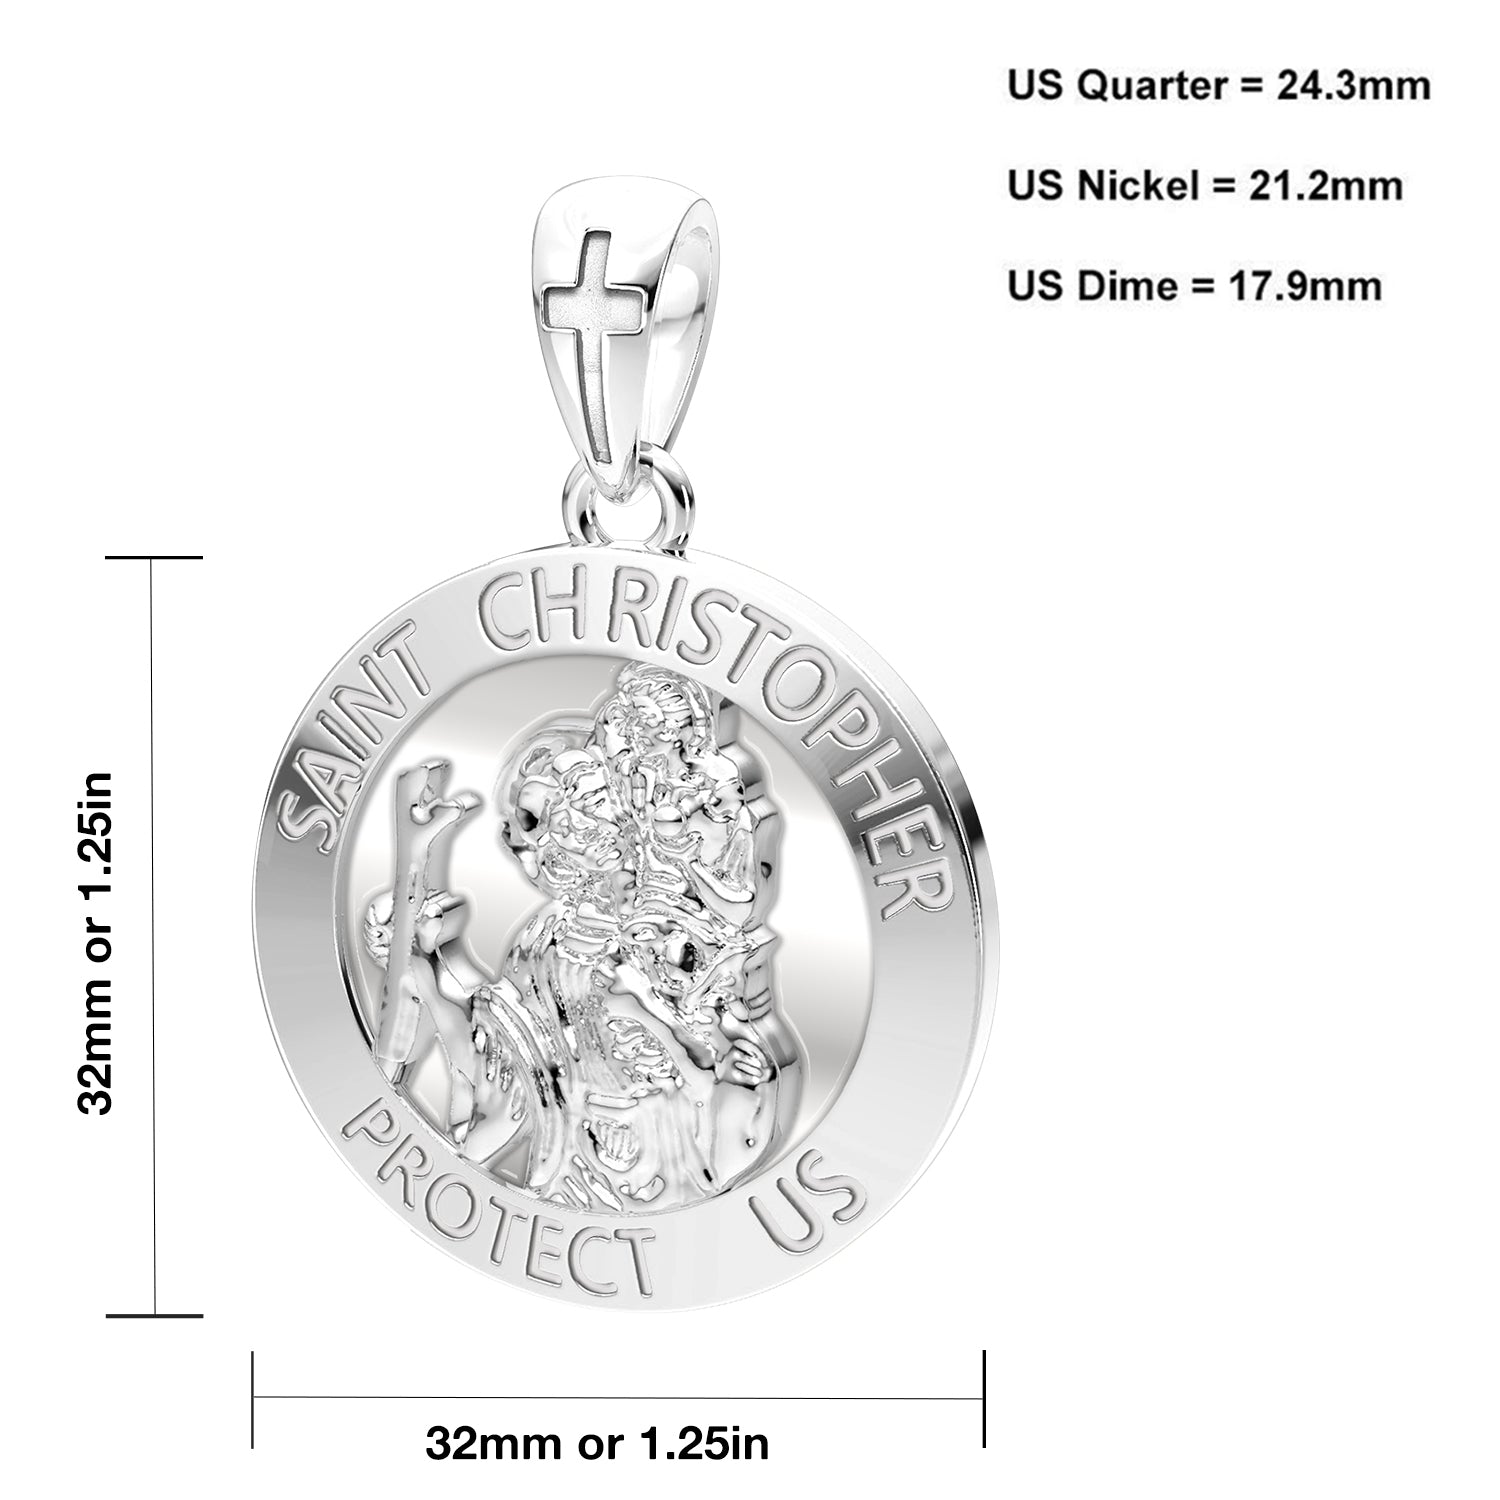 Men's XL 10K or 14K White Gold 1.25in St Saint Christopher Medal High Polished Pendant, 32mm - US Jewels